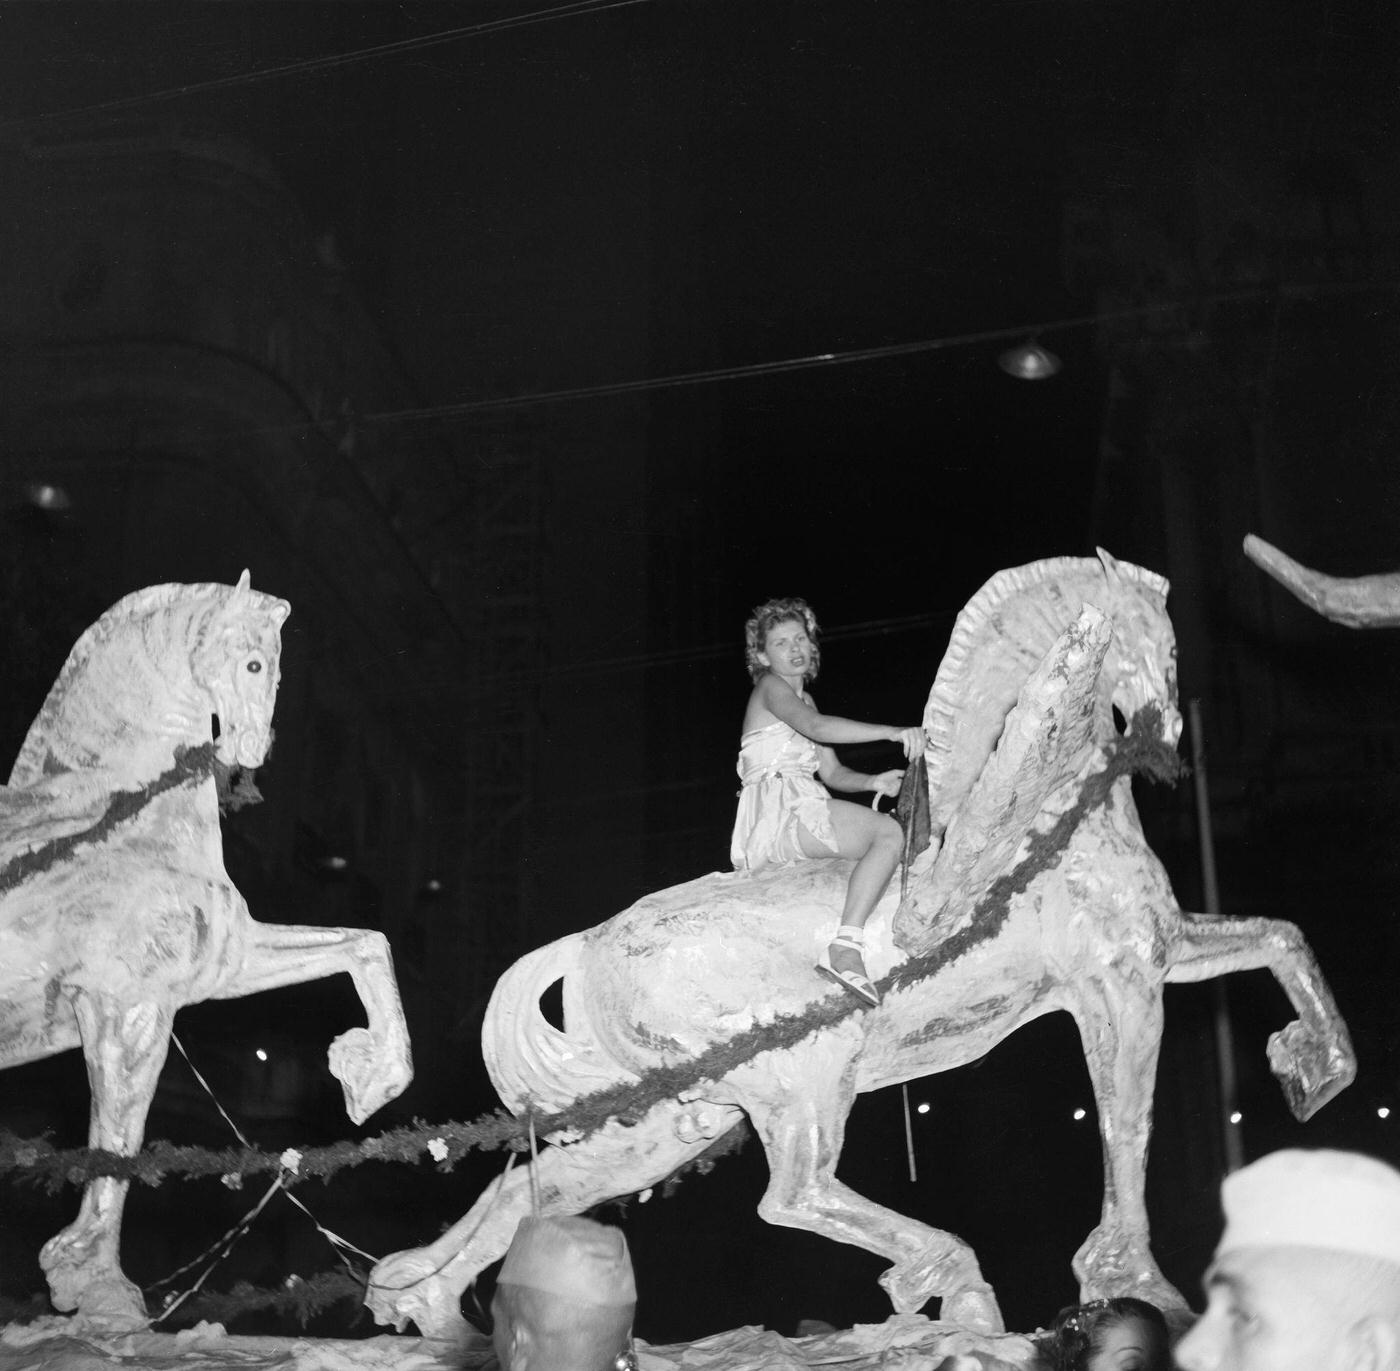 Carnival parade revelers on a float in Rio de Janeiro's Carnival. 1953